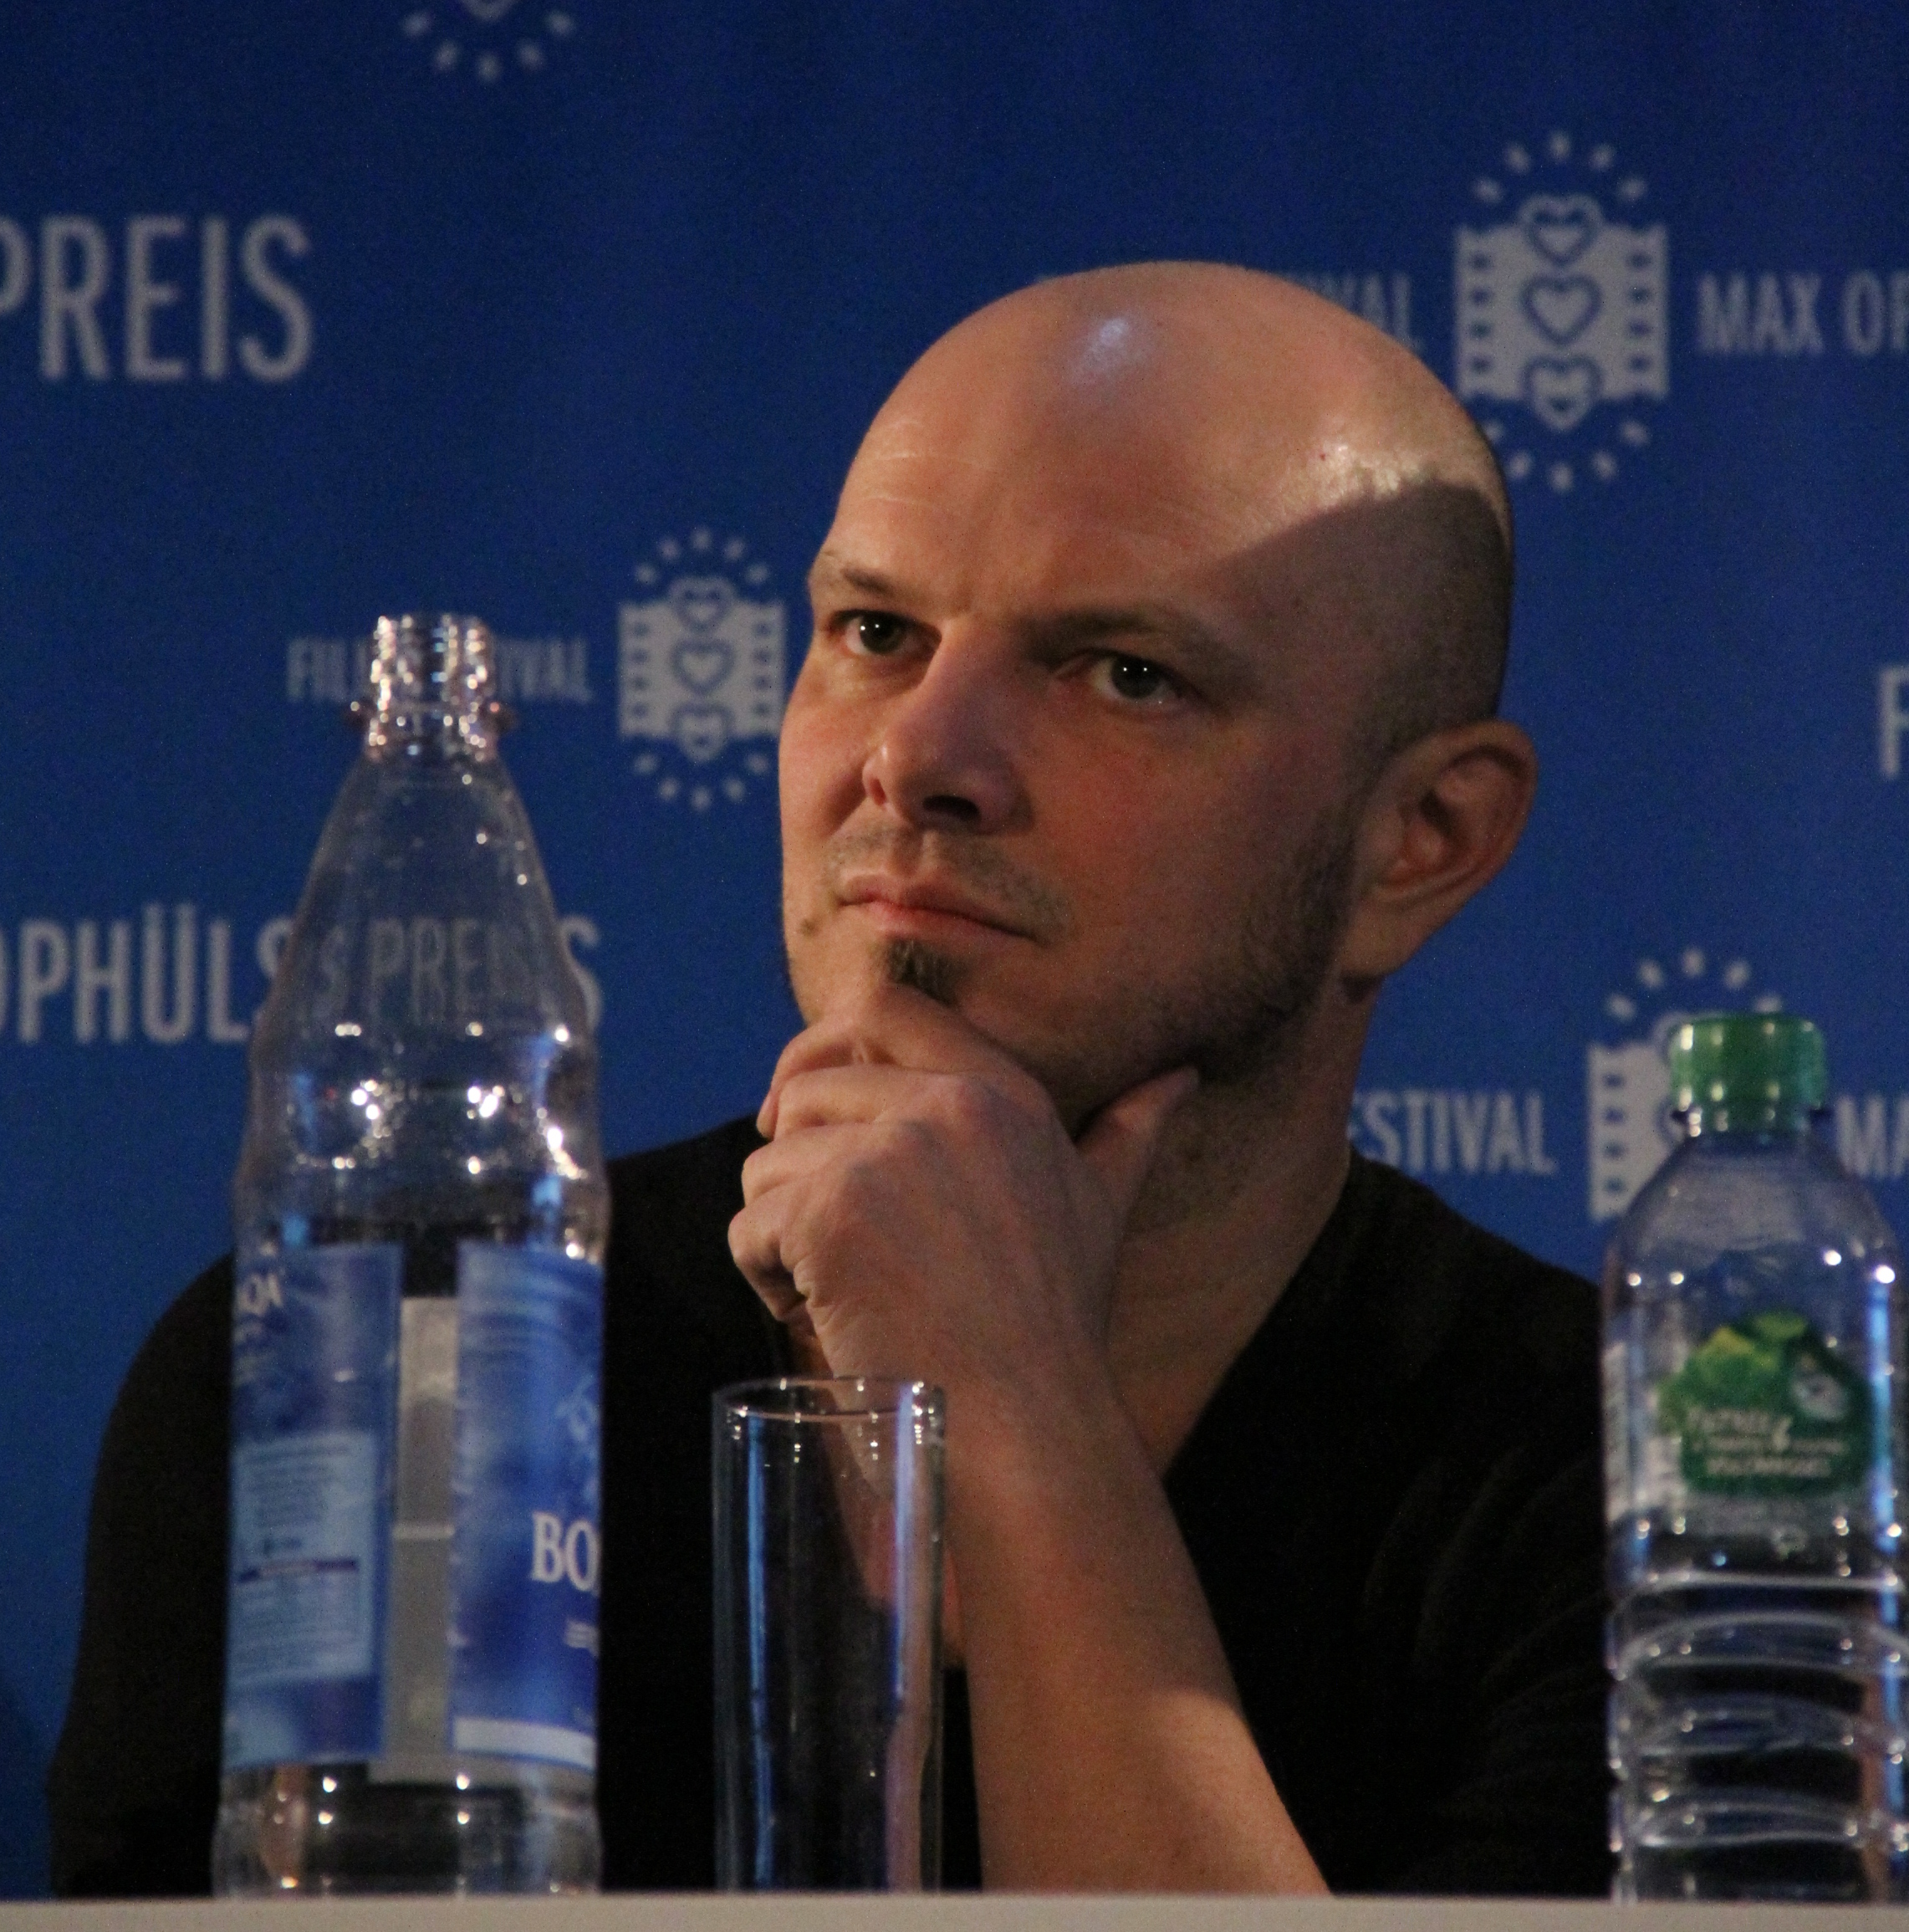 Philipp Max - Wikipedia